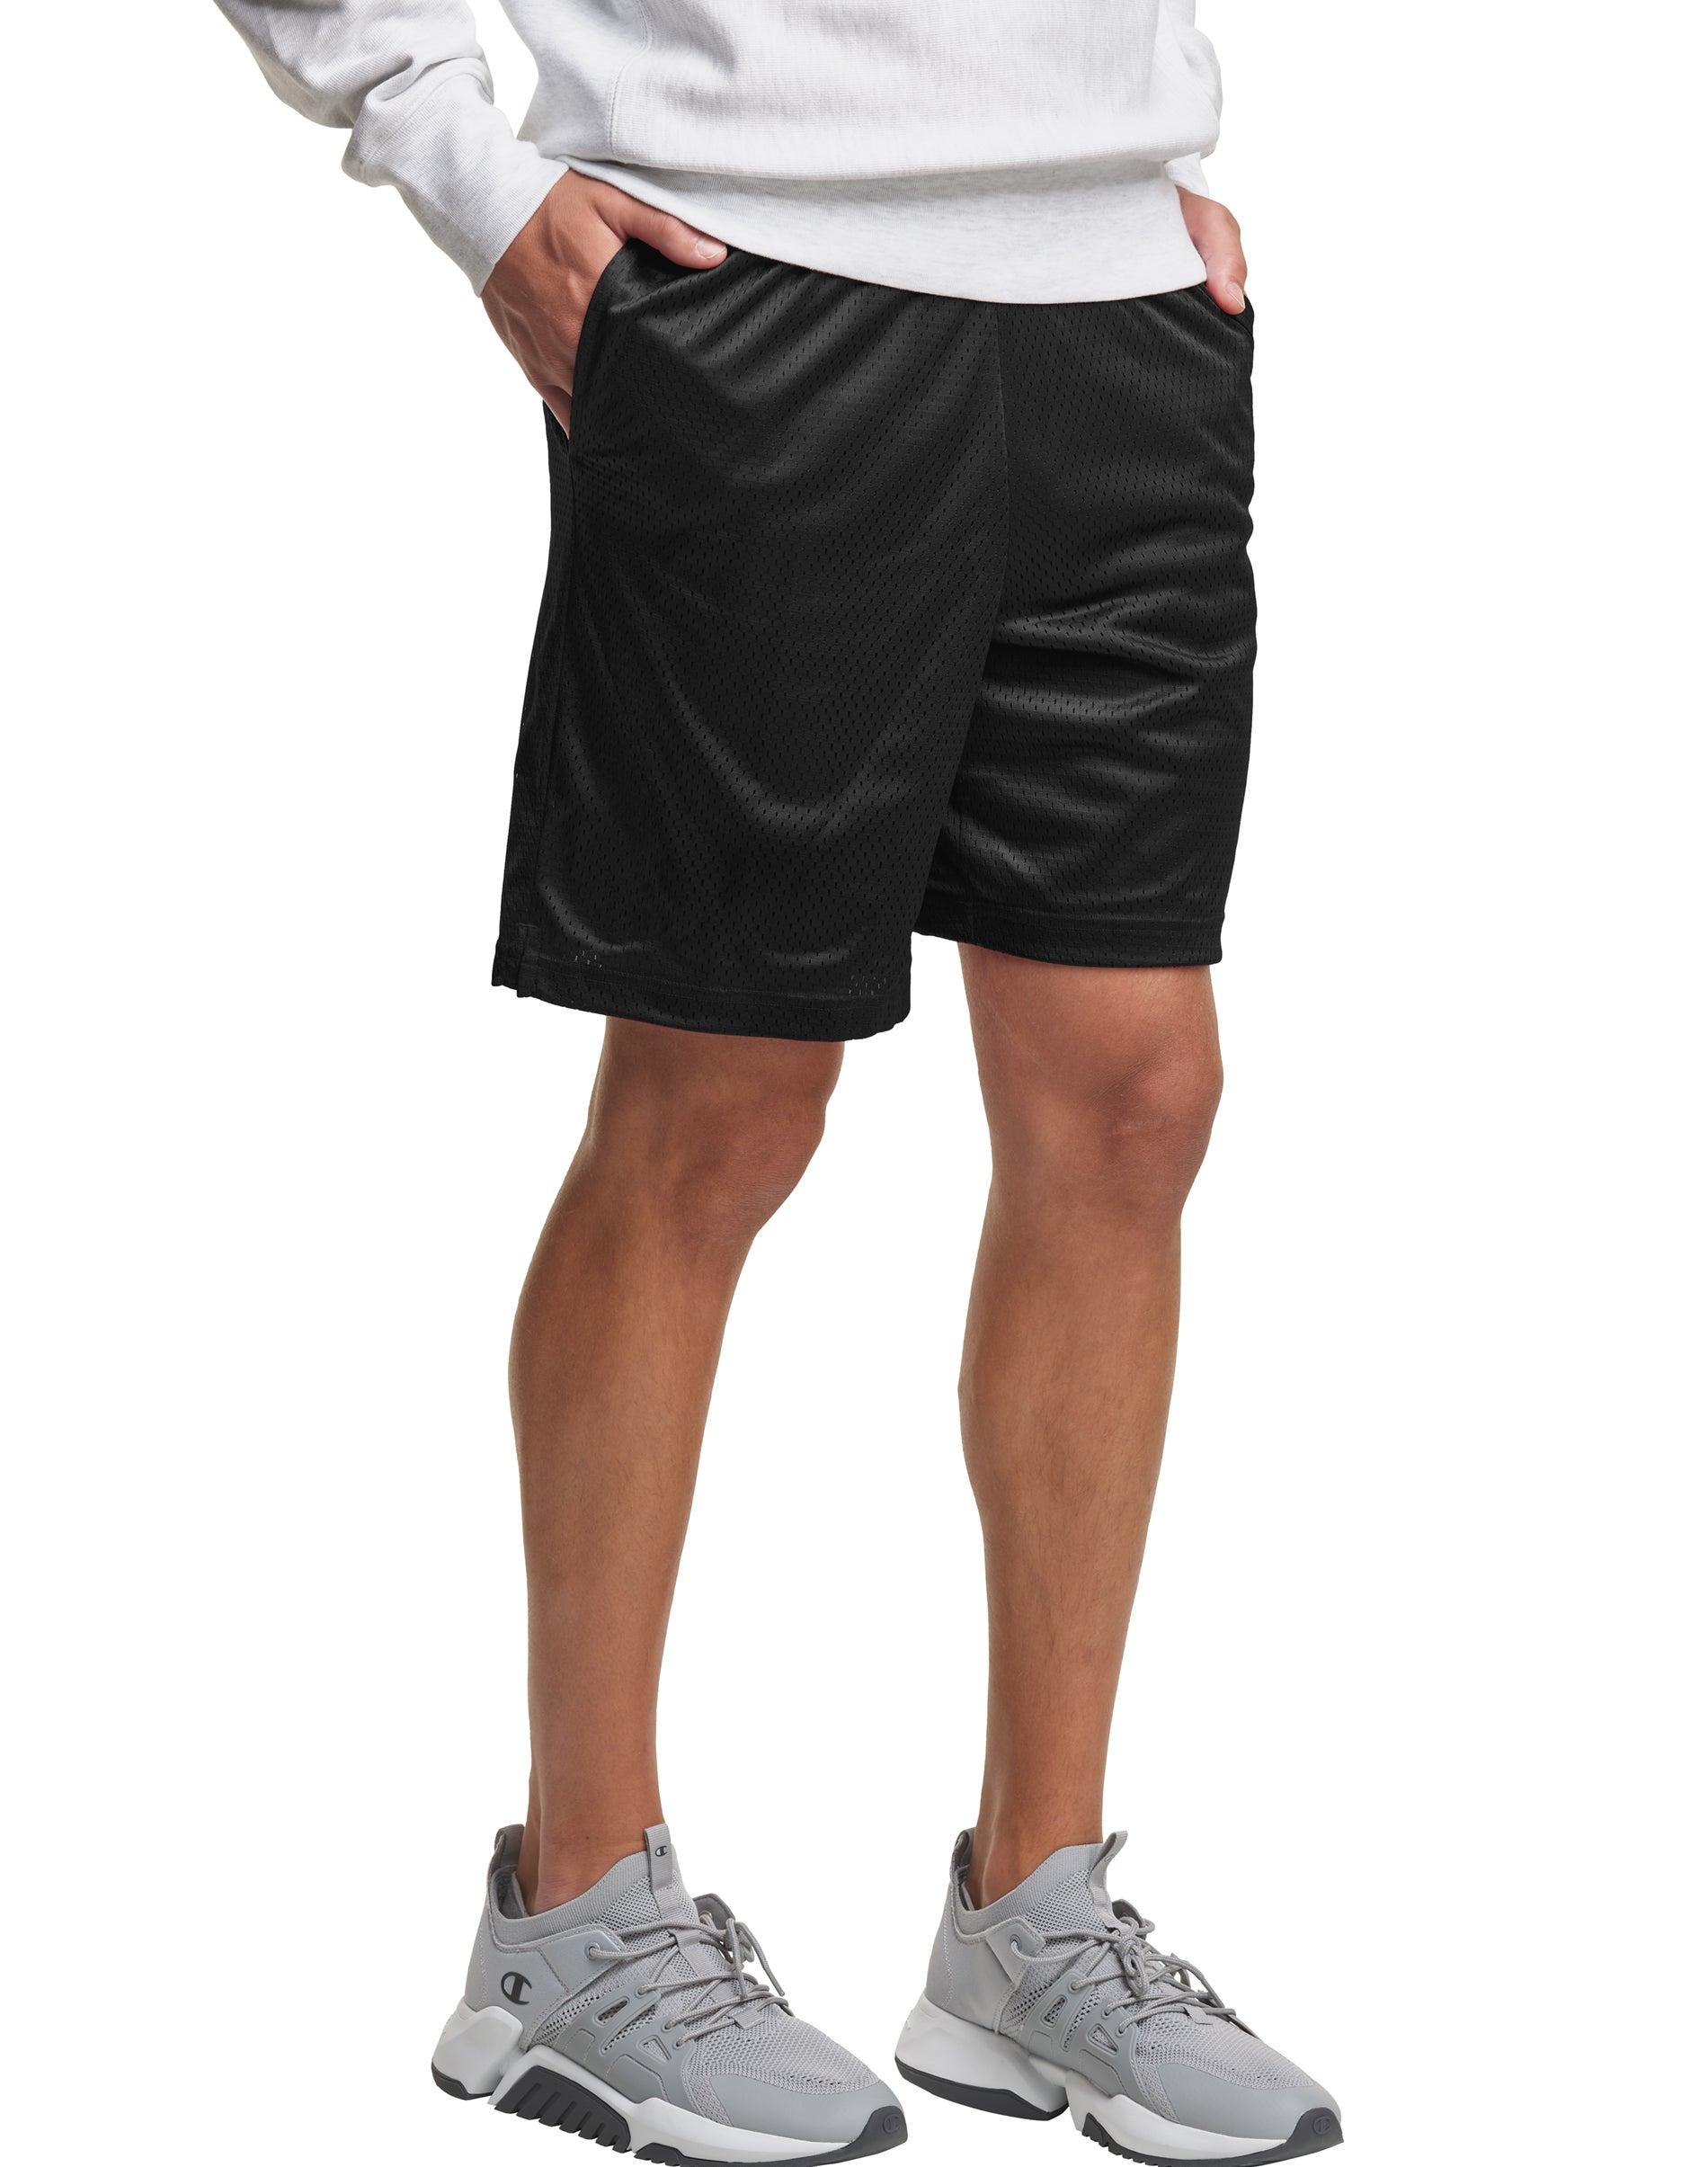 Champion Athletics Mesh Shorts in Black for Men - Lyst